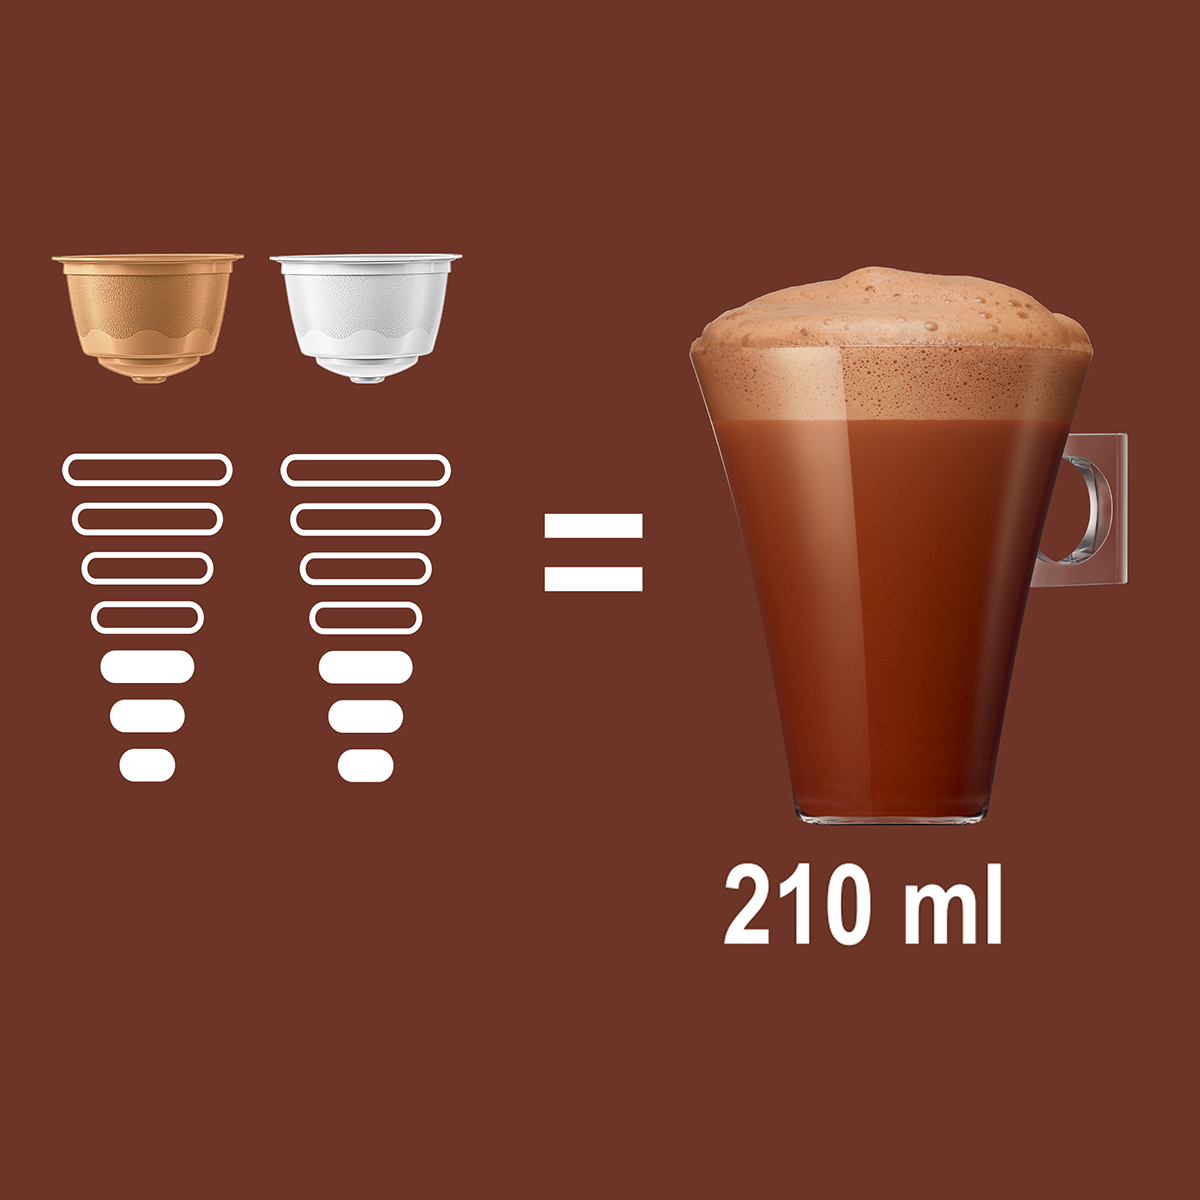 Chocolate Chococcino Dolce Gusto, 16 cápsulas